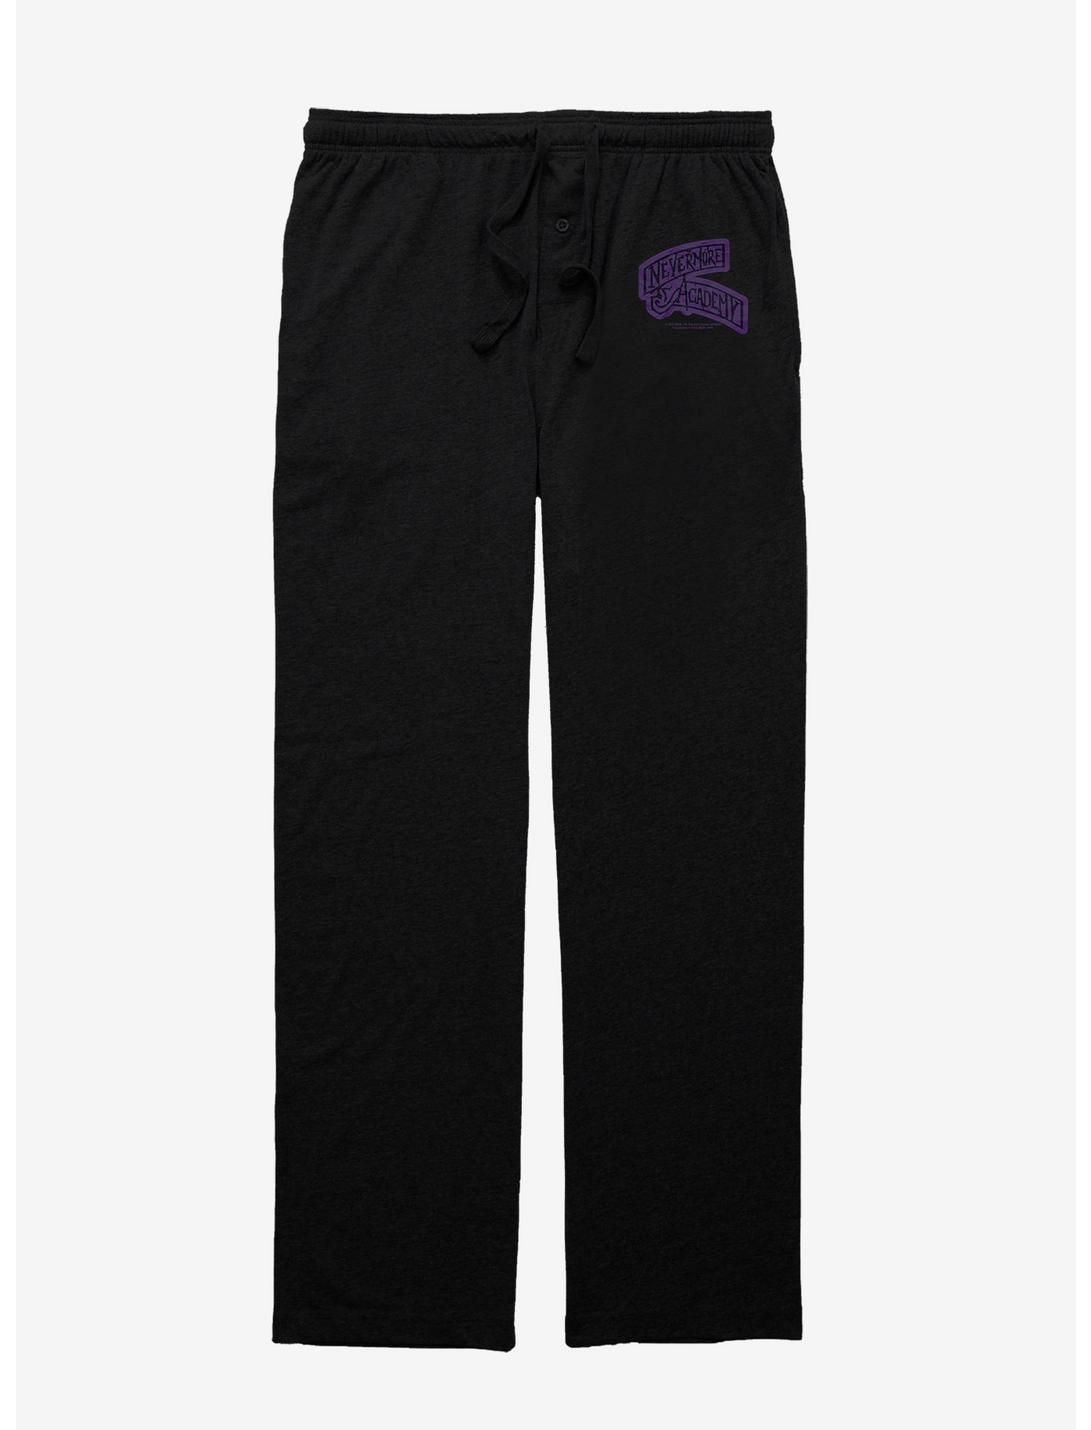 Wednesday Nevermore Academy Pajama Pants, BLACK, hi-res